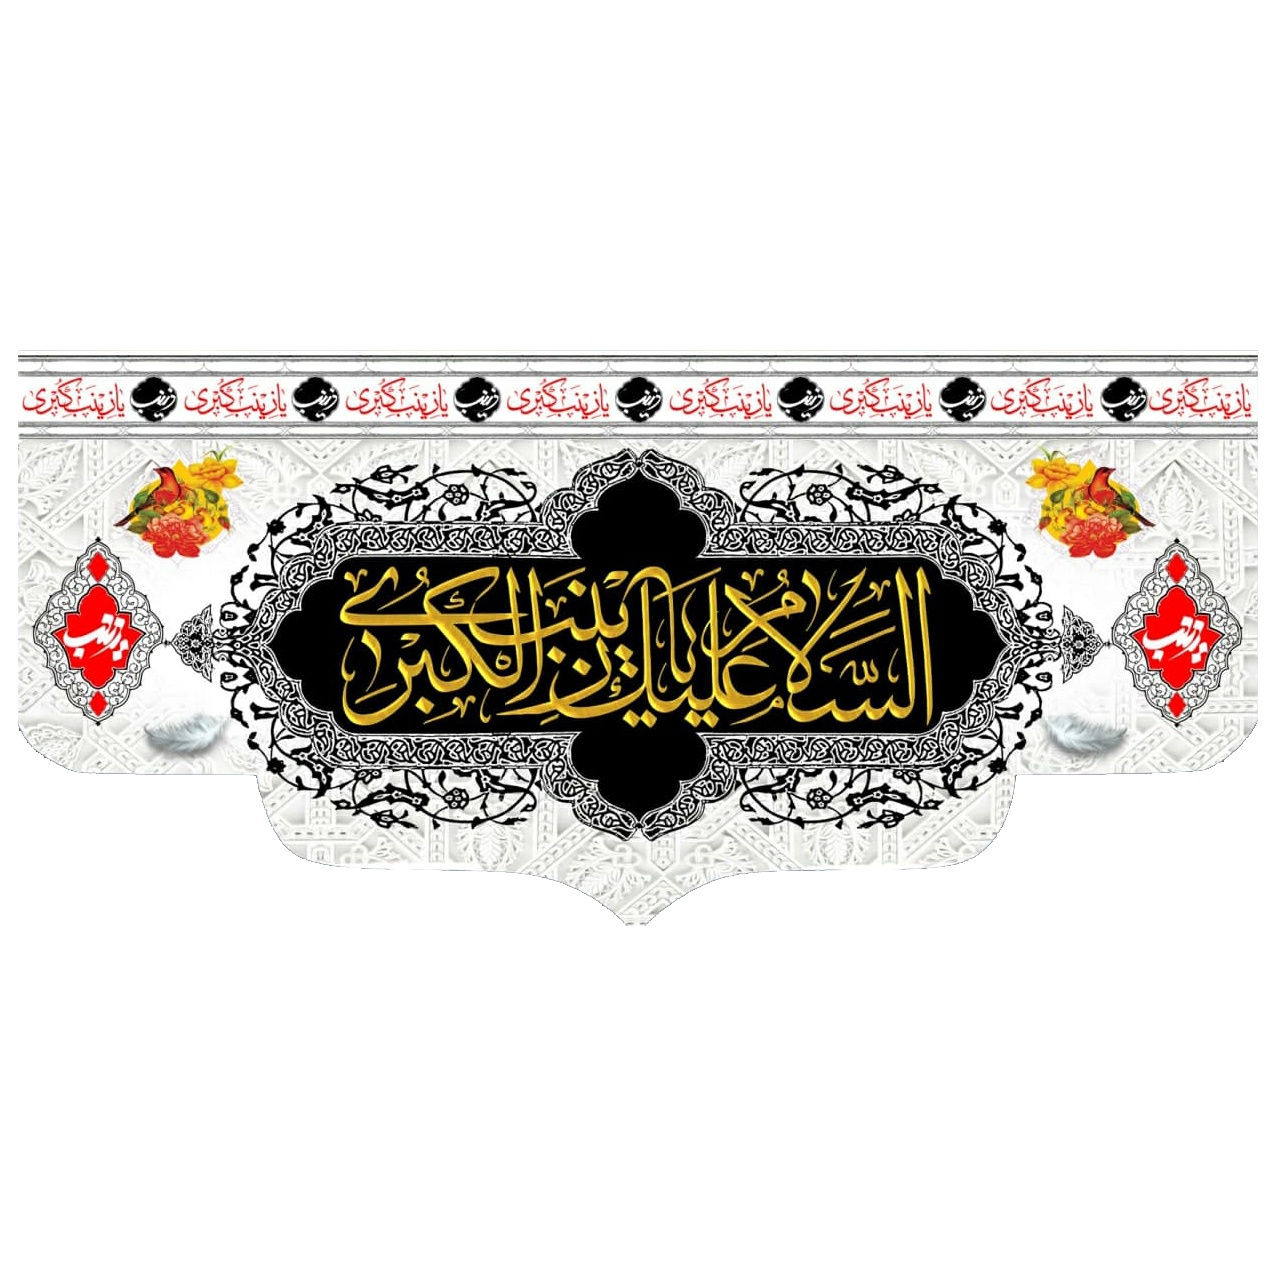 پرچم مدل السلام علیک یا زینب الکبری کد 150001-14070